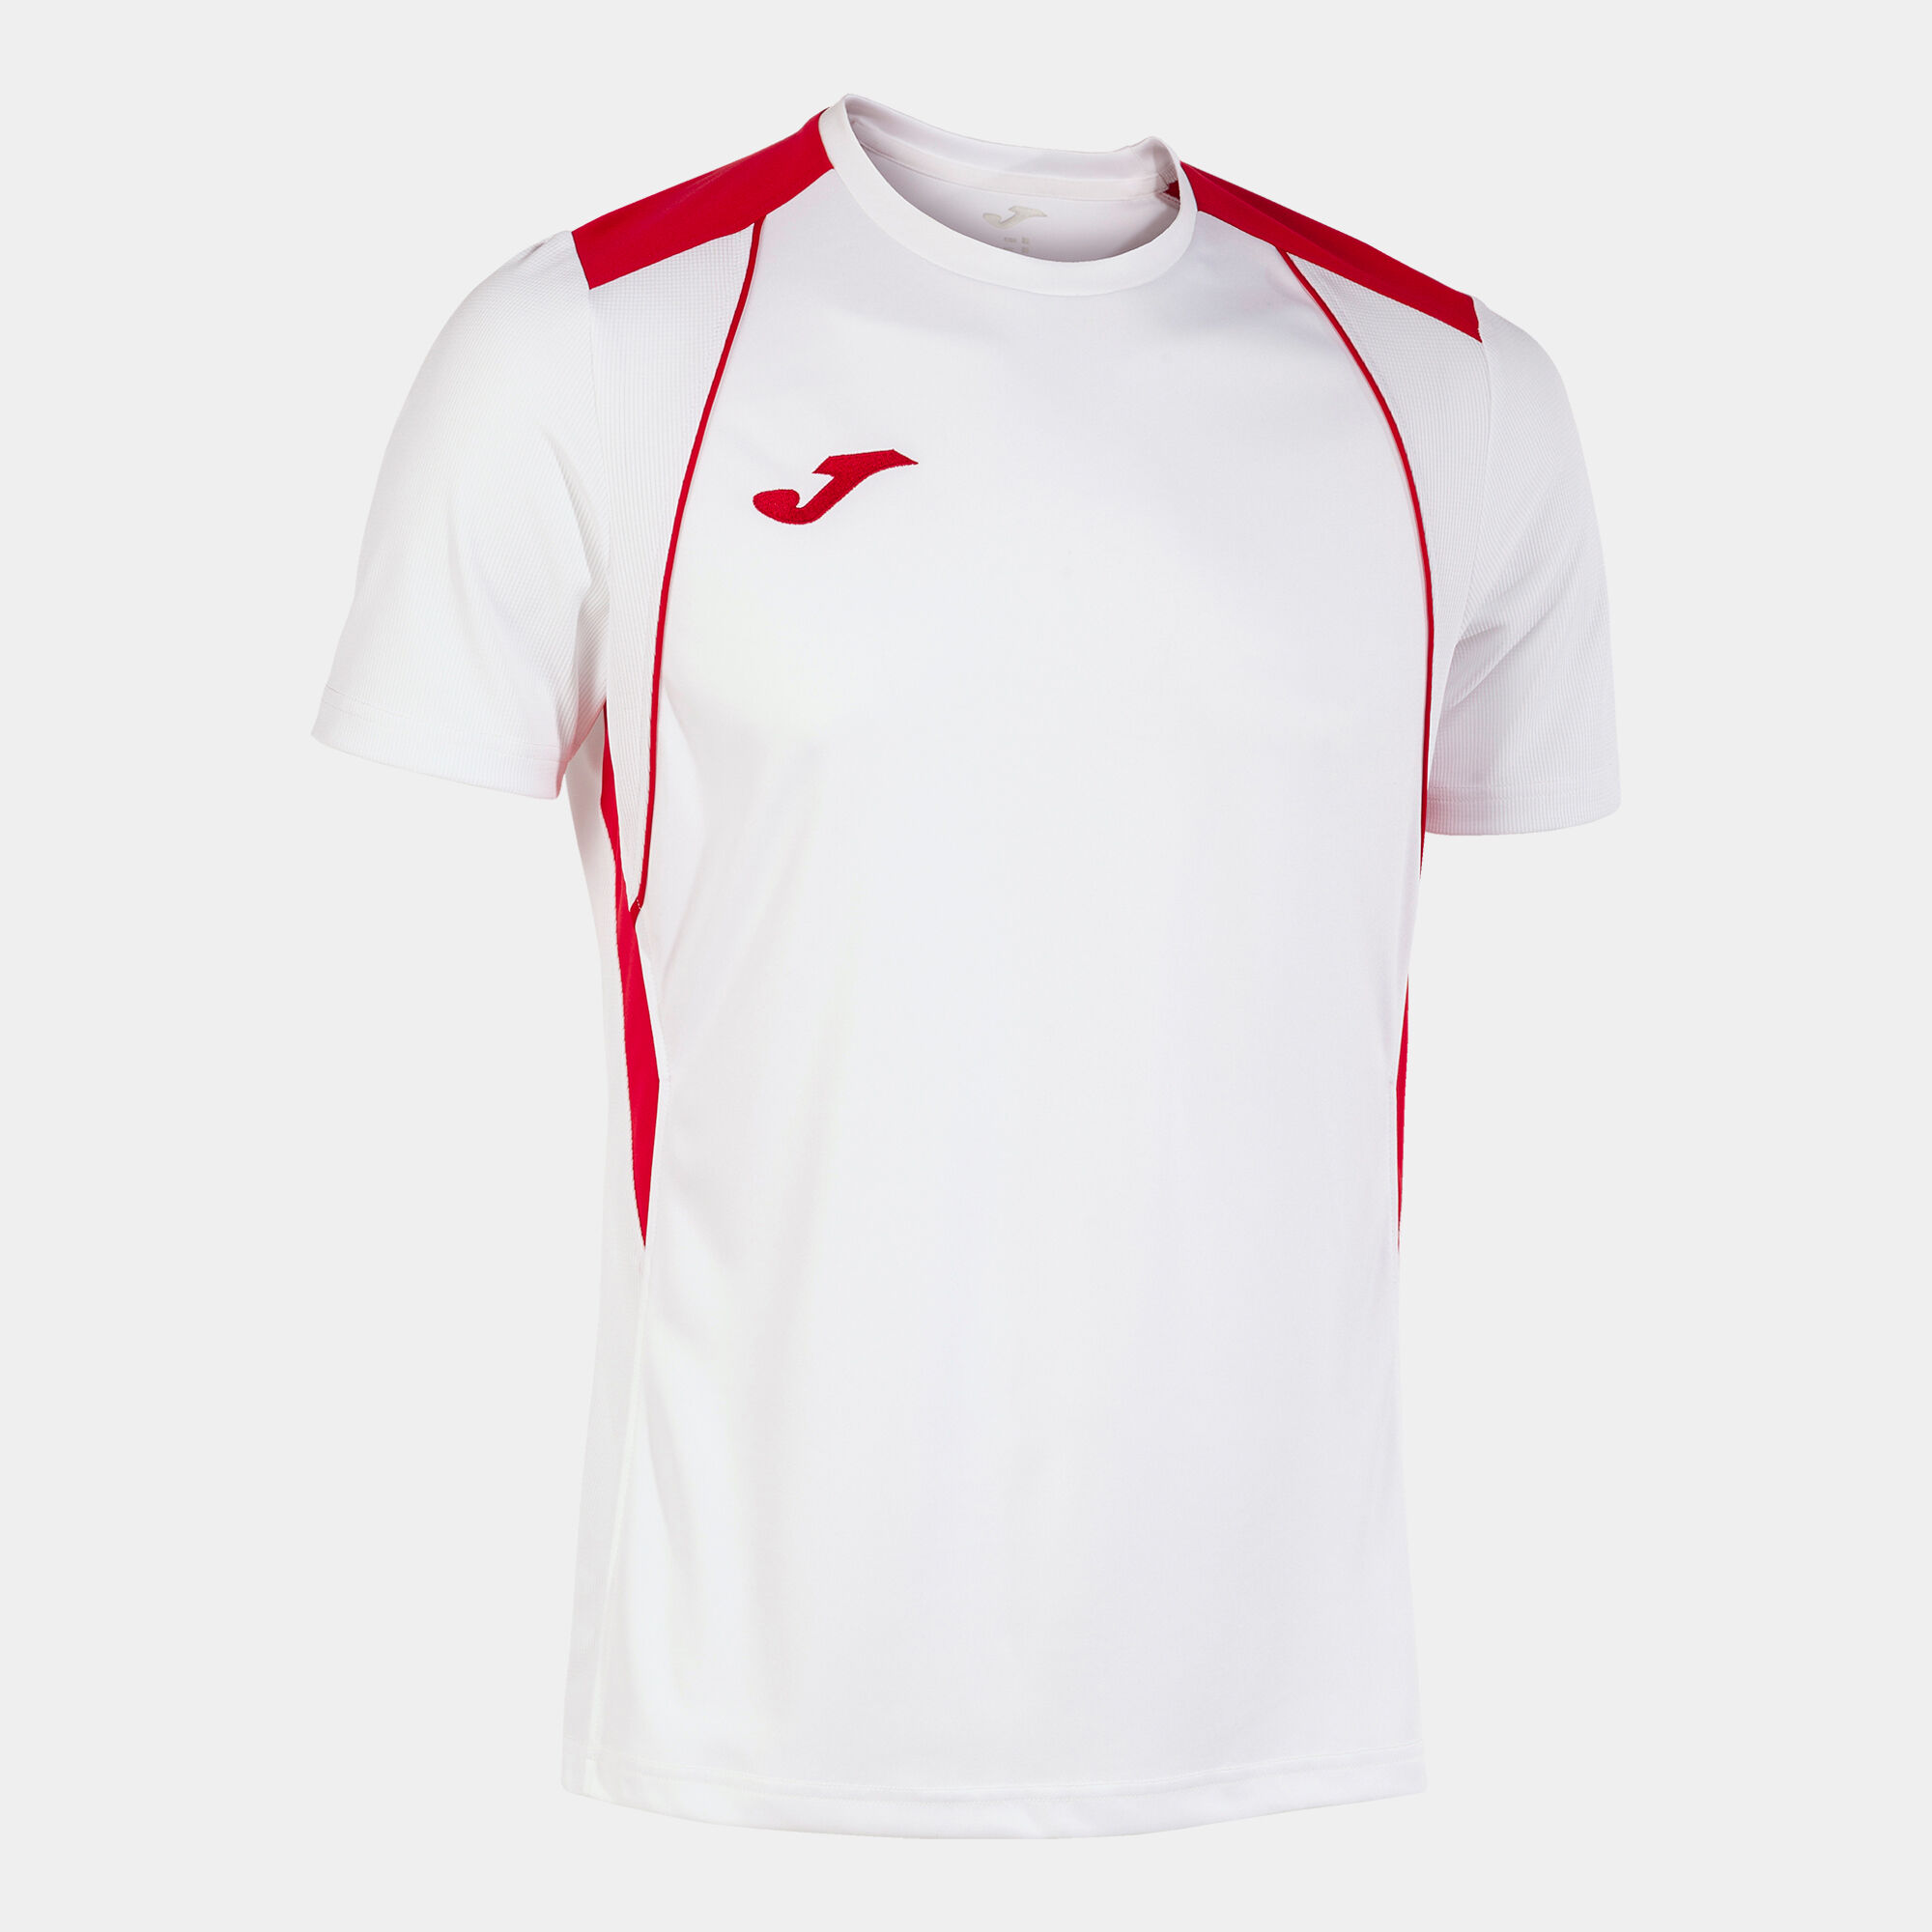 Camiseta manga corta hombre Championship VII blanco rojo